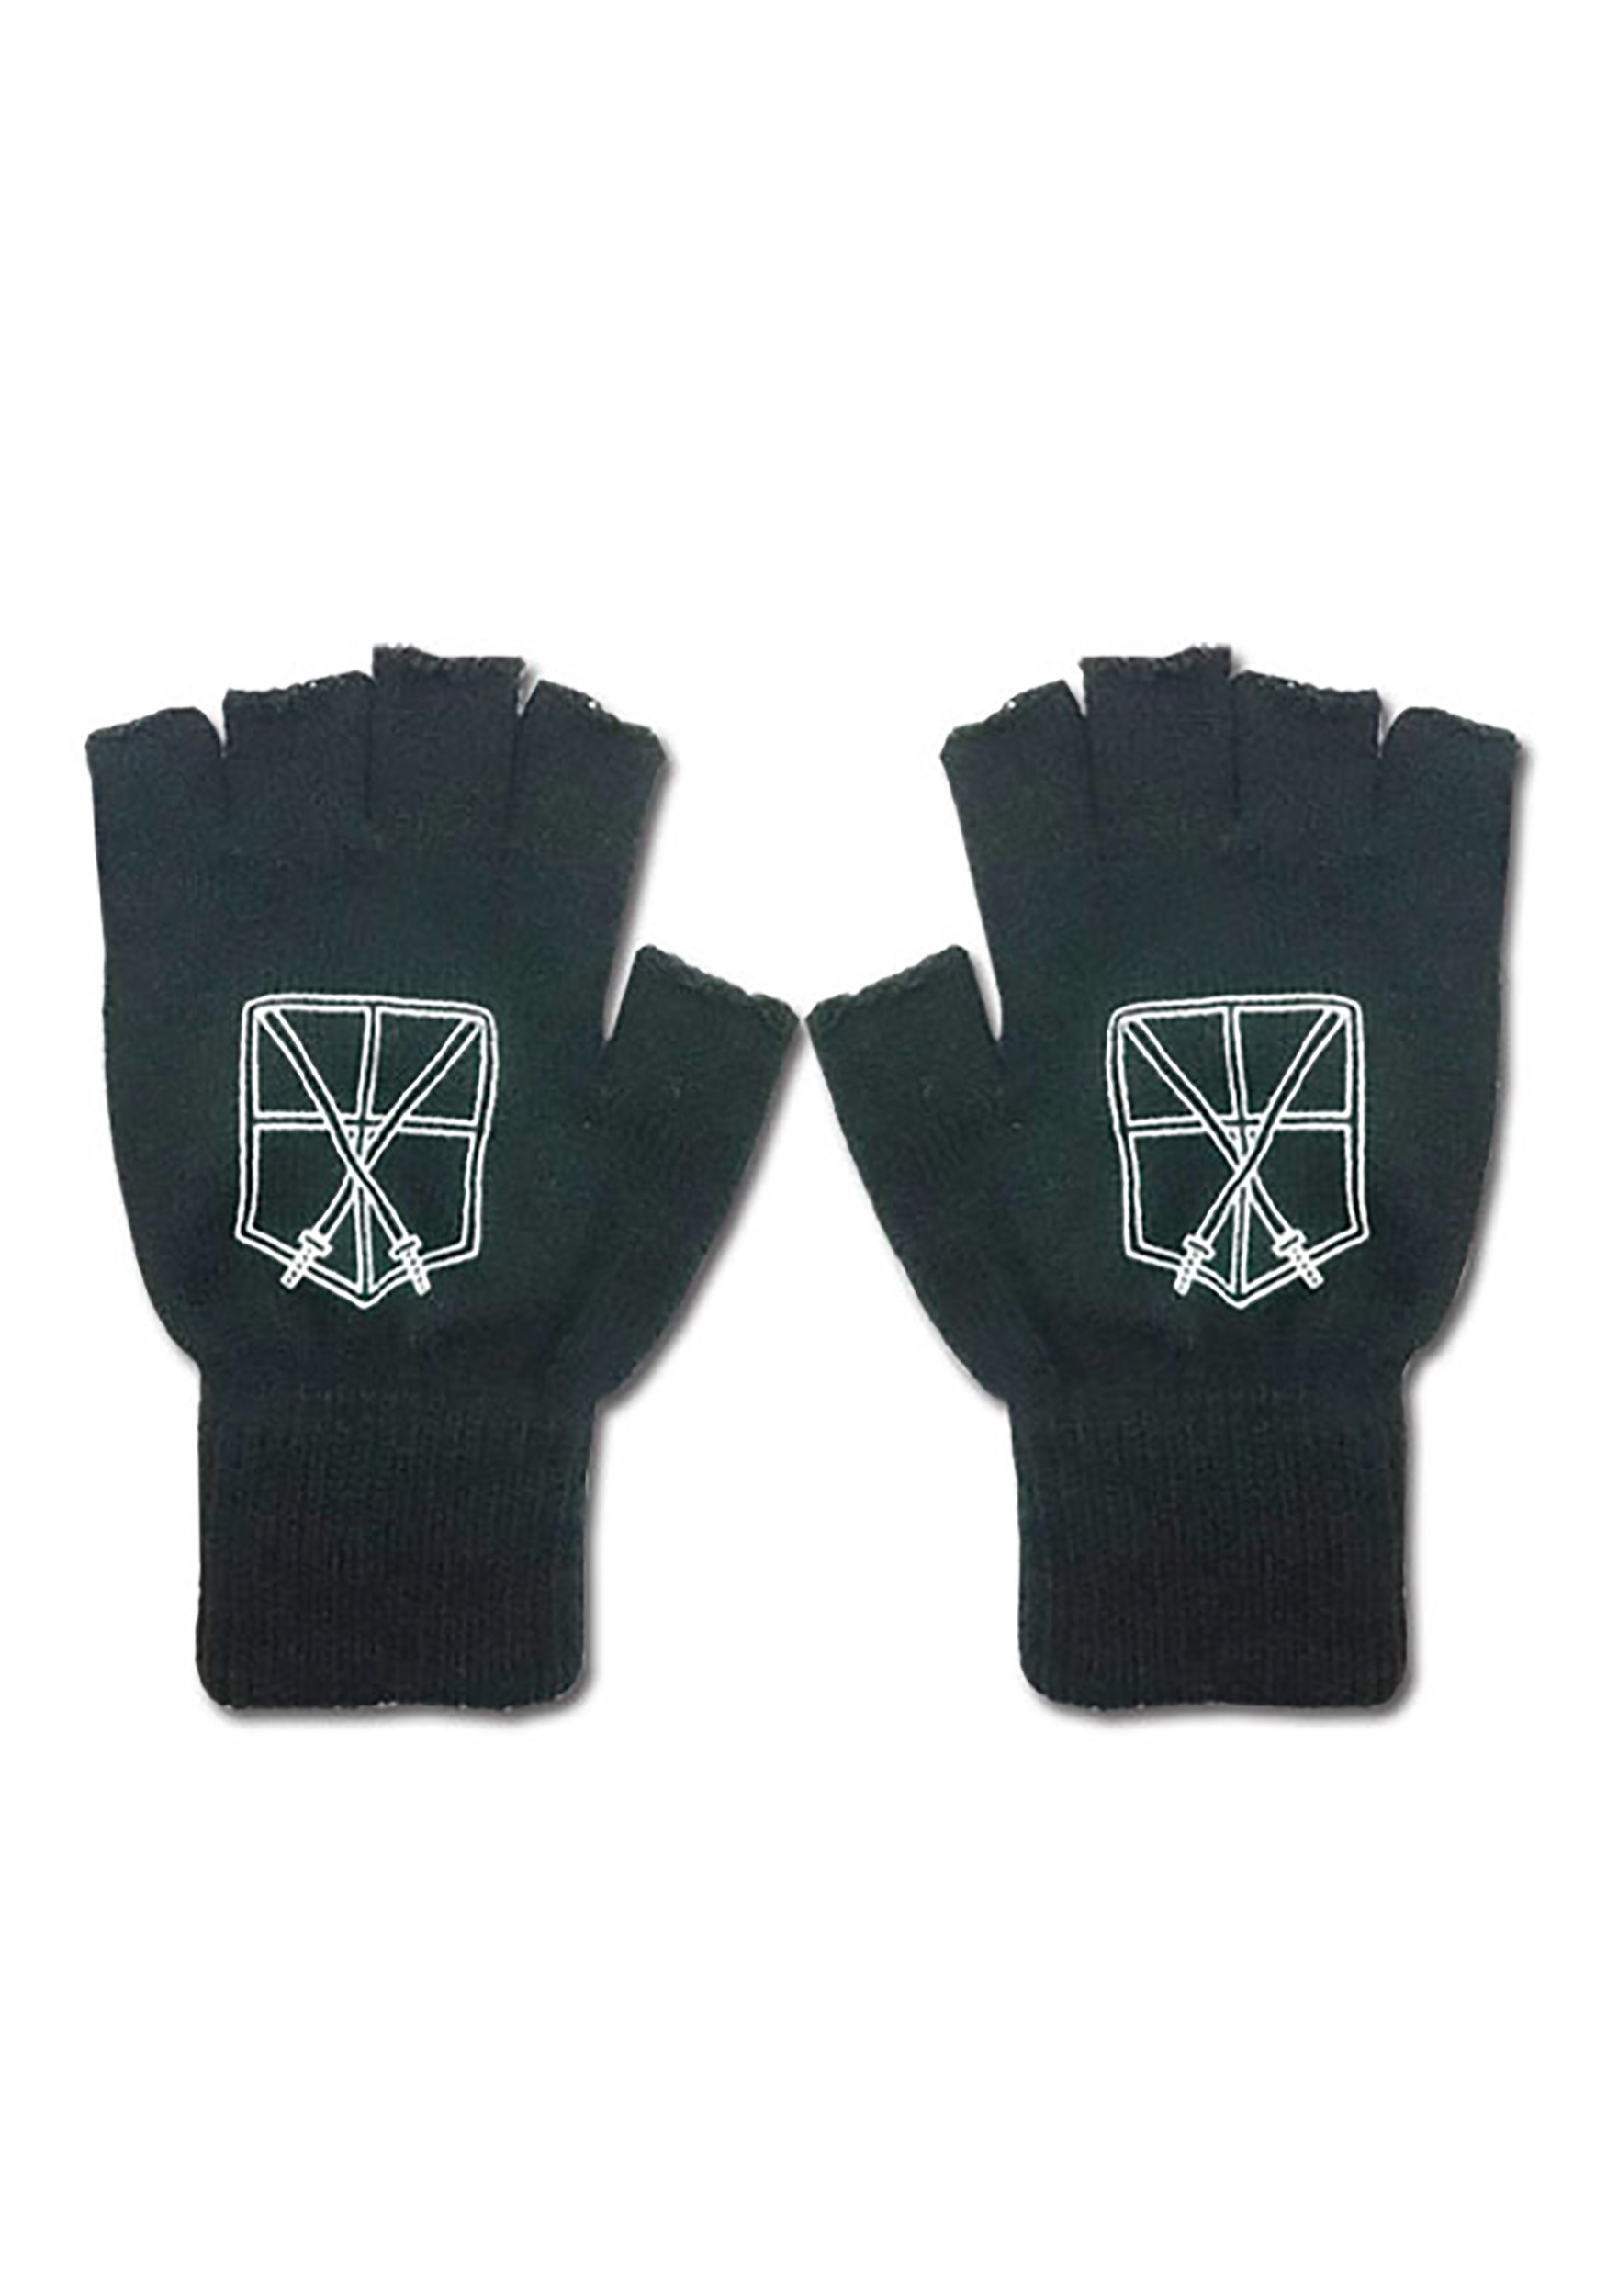 Attack on Titan Cadet Corps Gloves